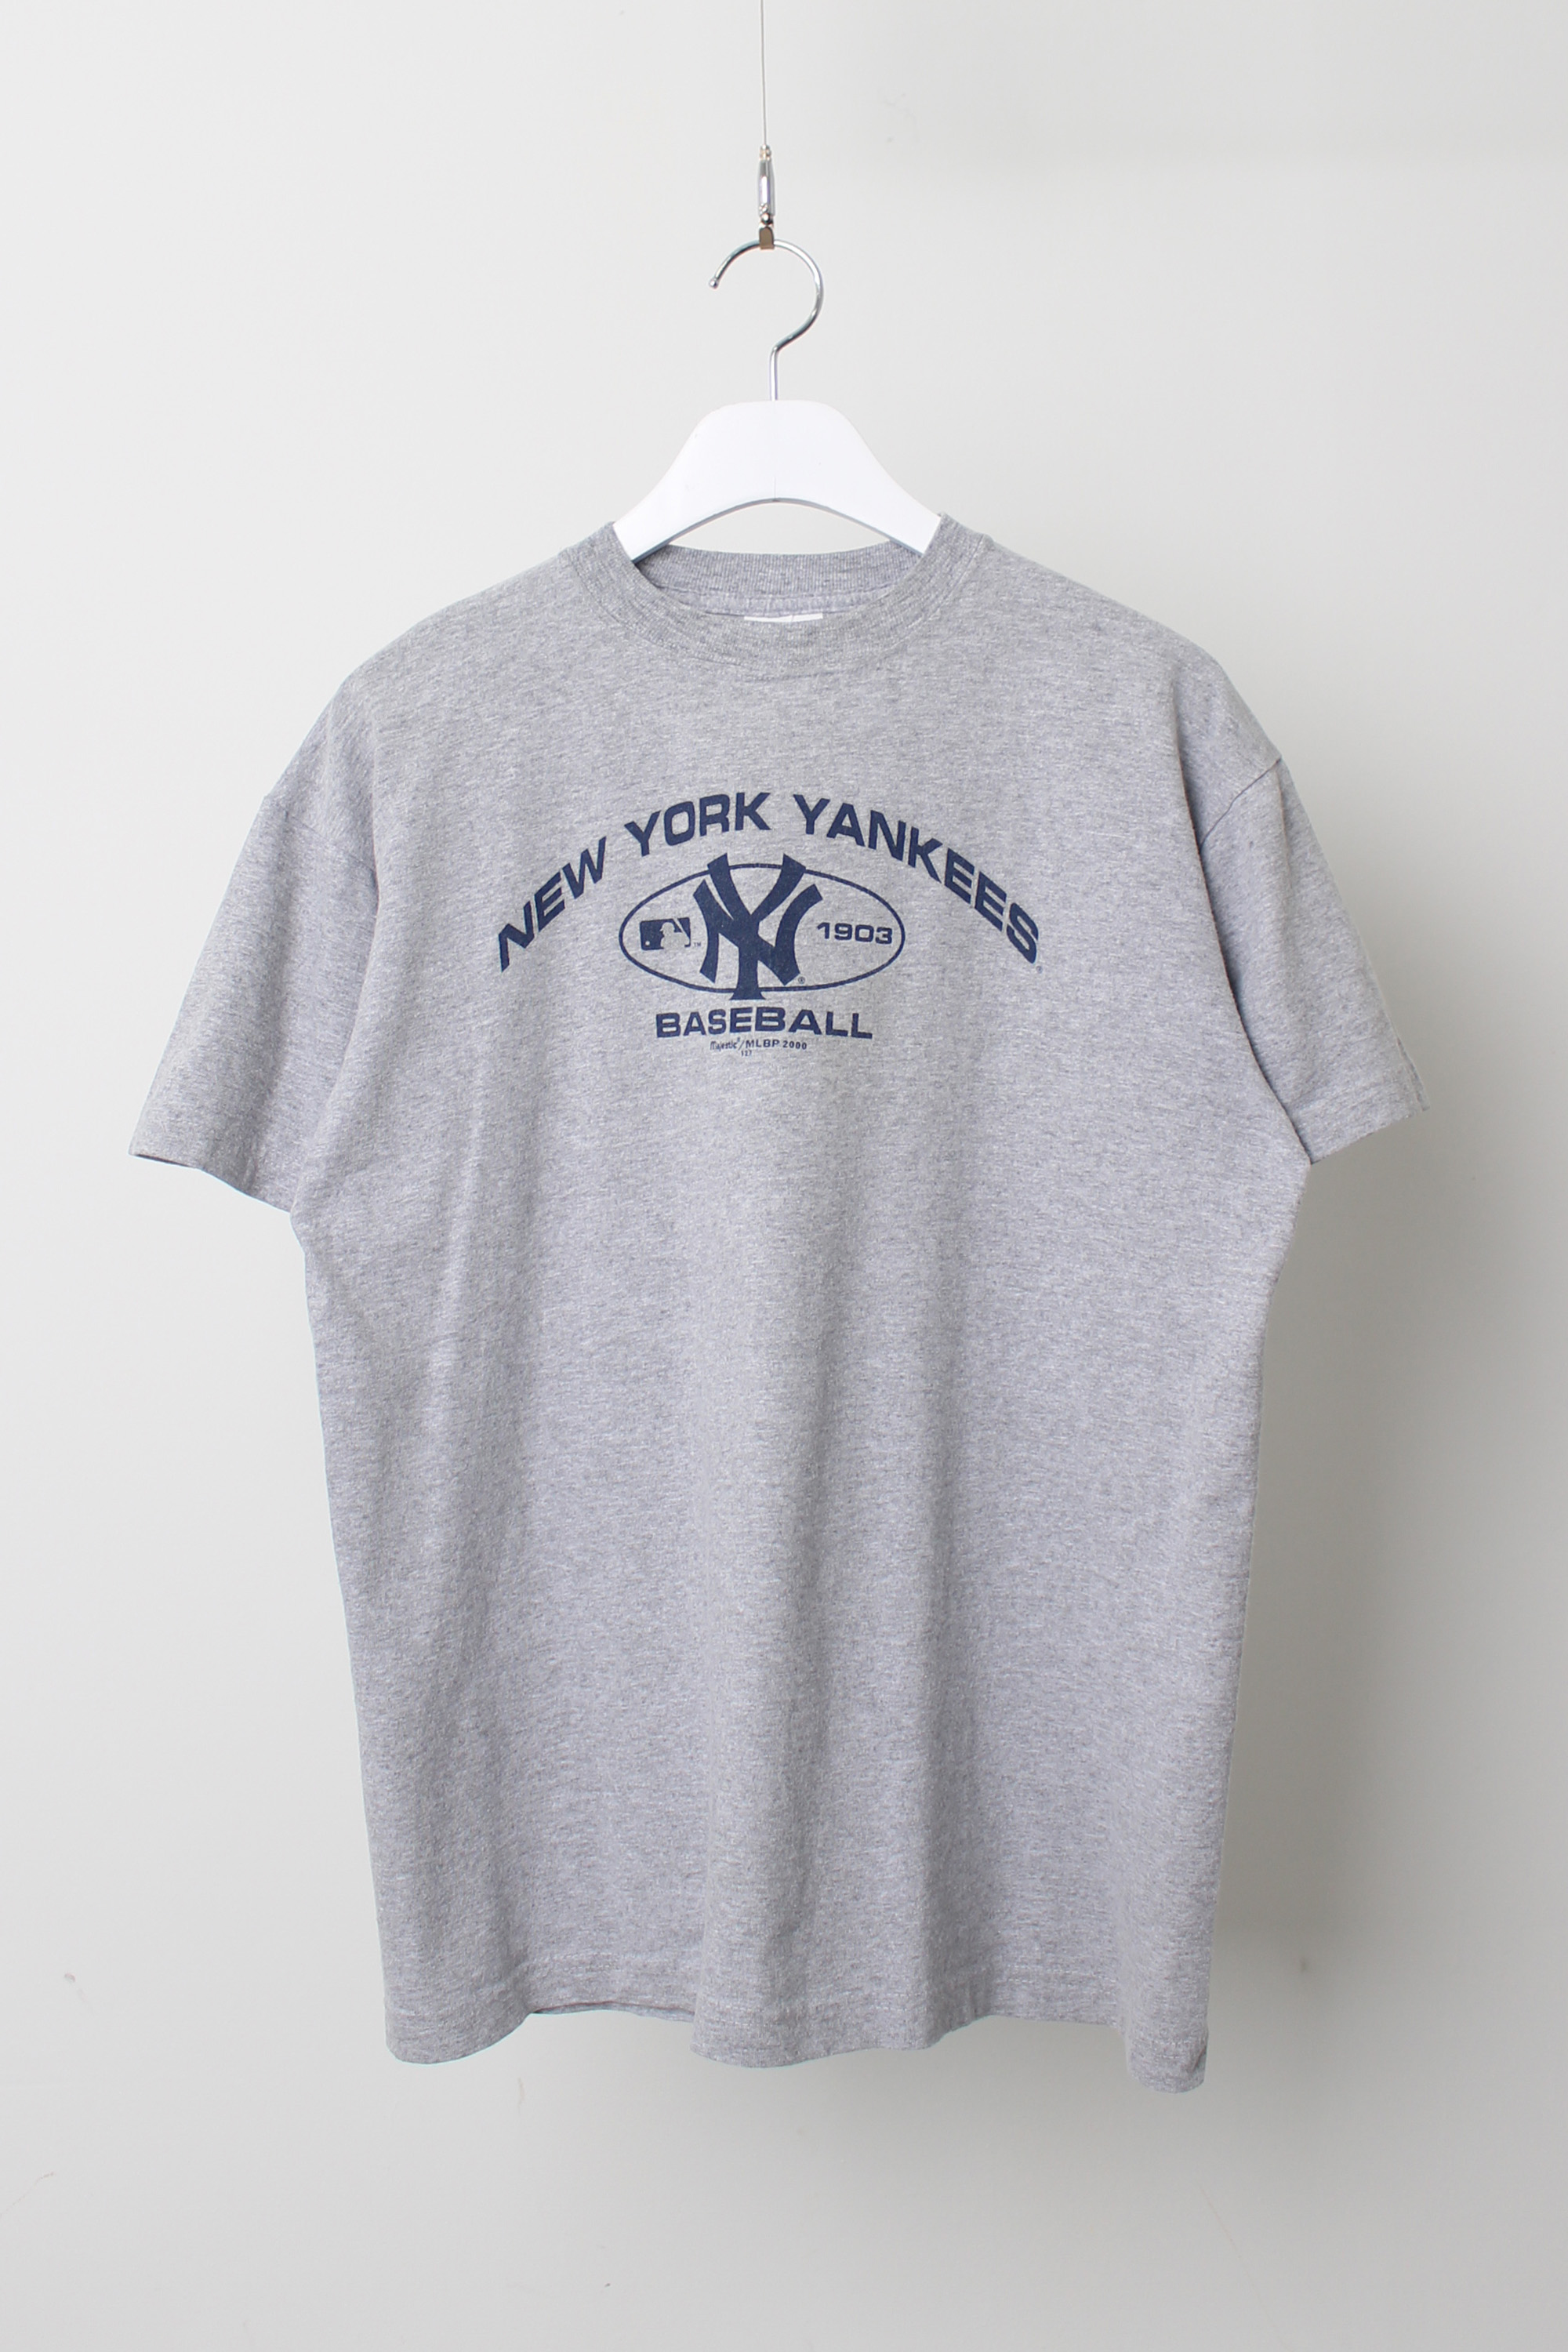 Vintage majestic NY t-shirt